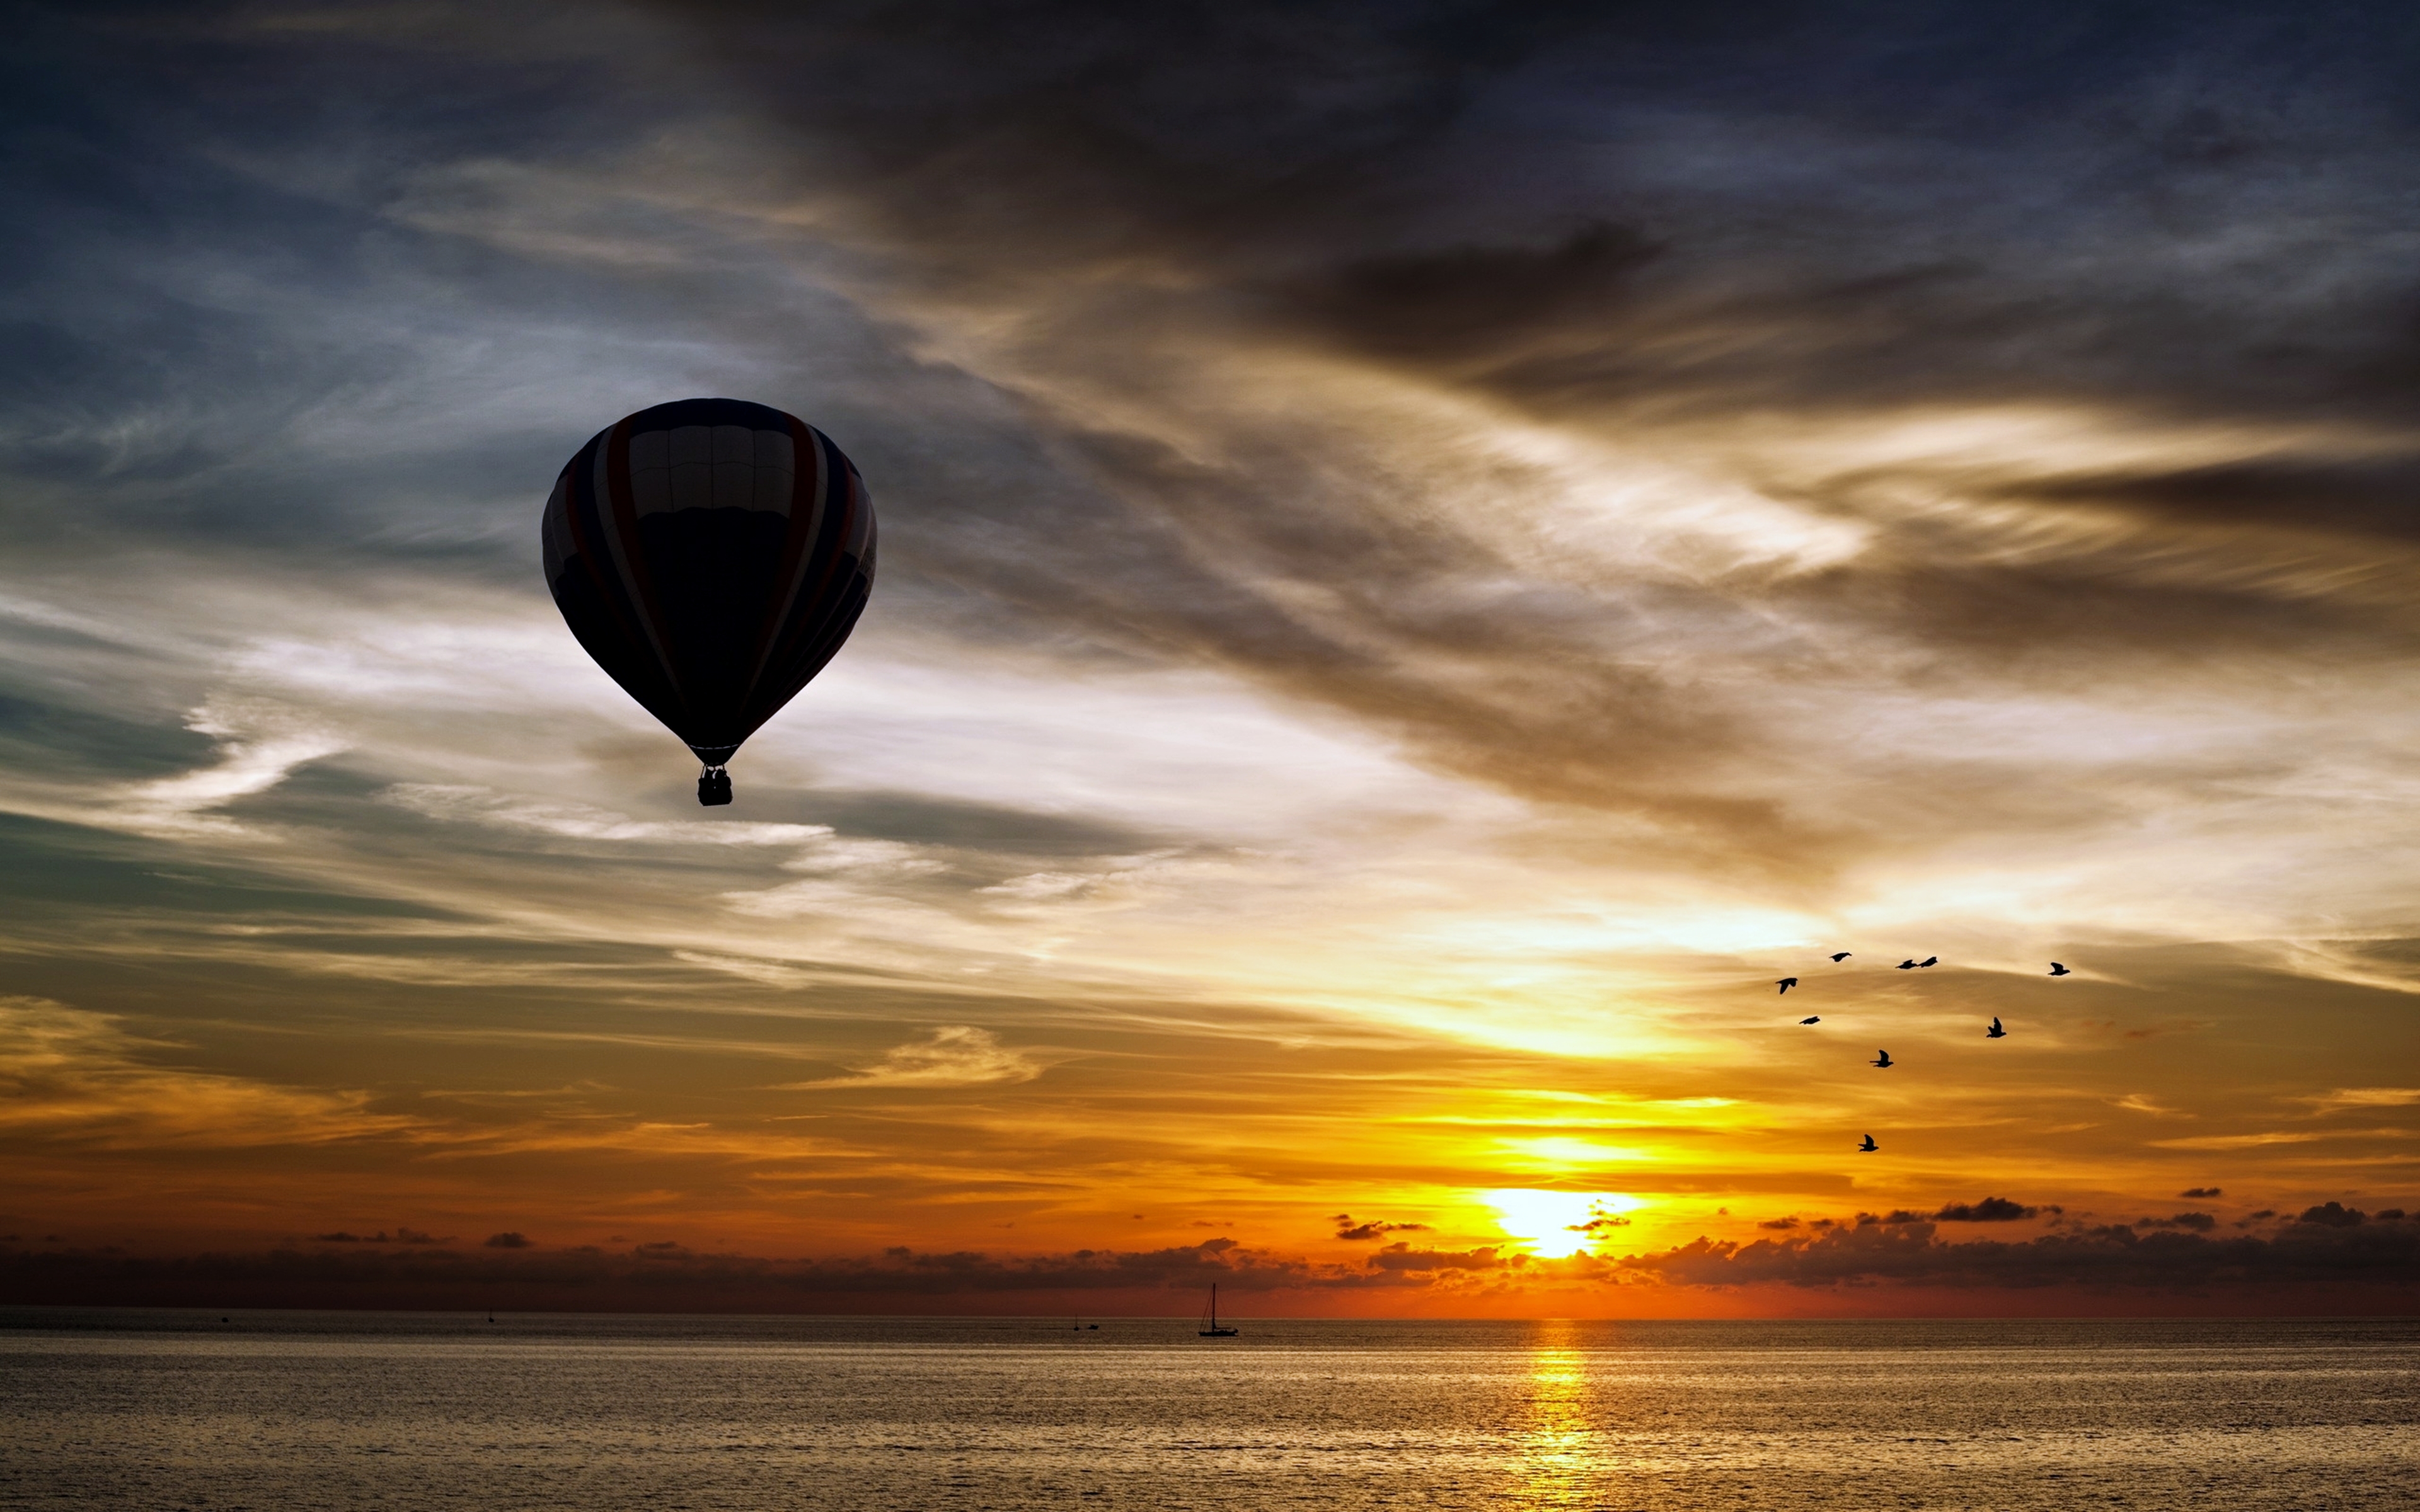 Воздушный шар на море. Воздушный шар в небе на закате. Воздушный шар на закате. Воздушные шары в небе на закате. Воздушные шары на закате.